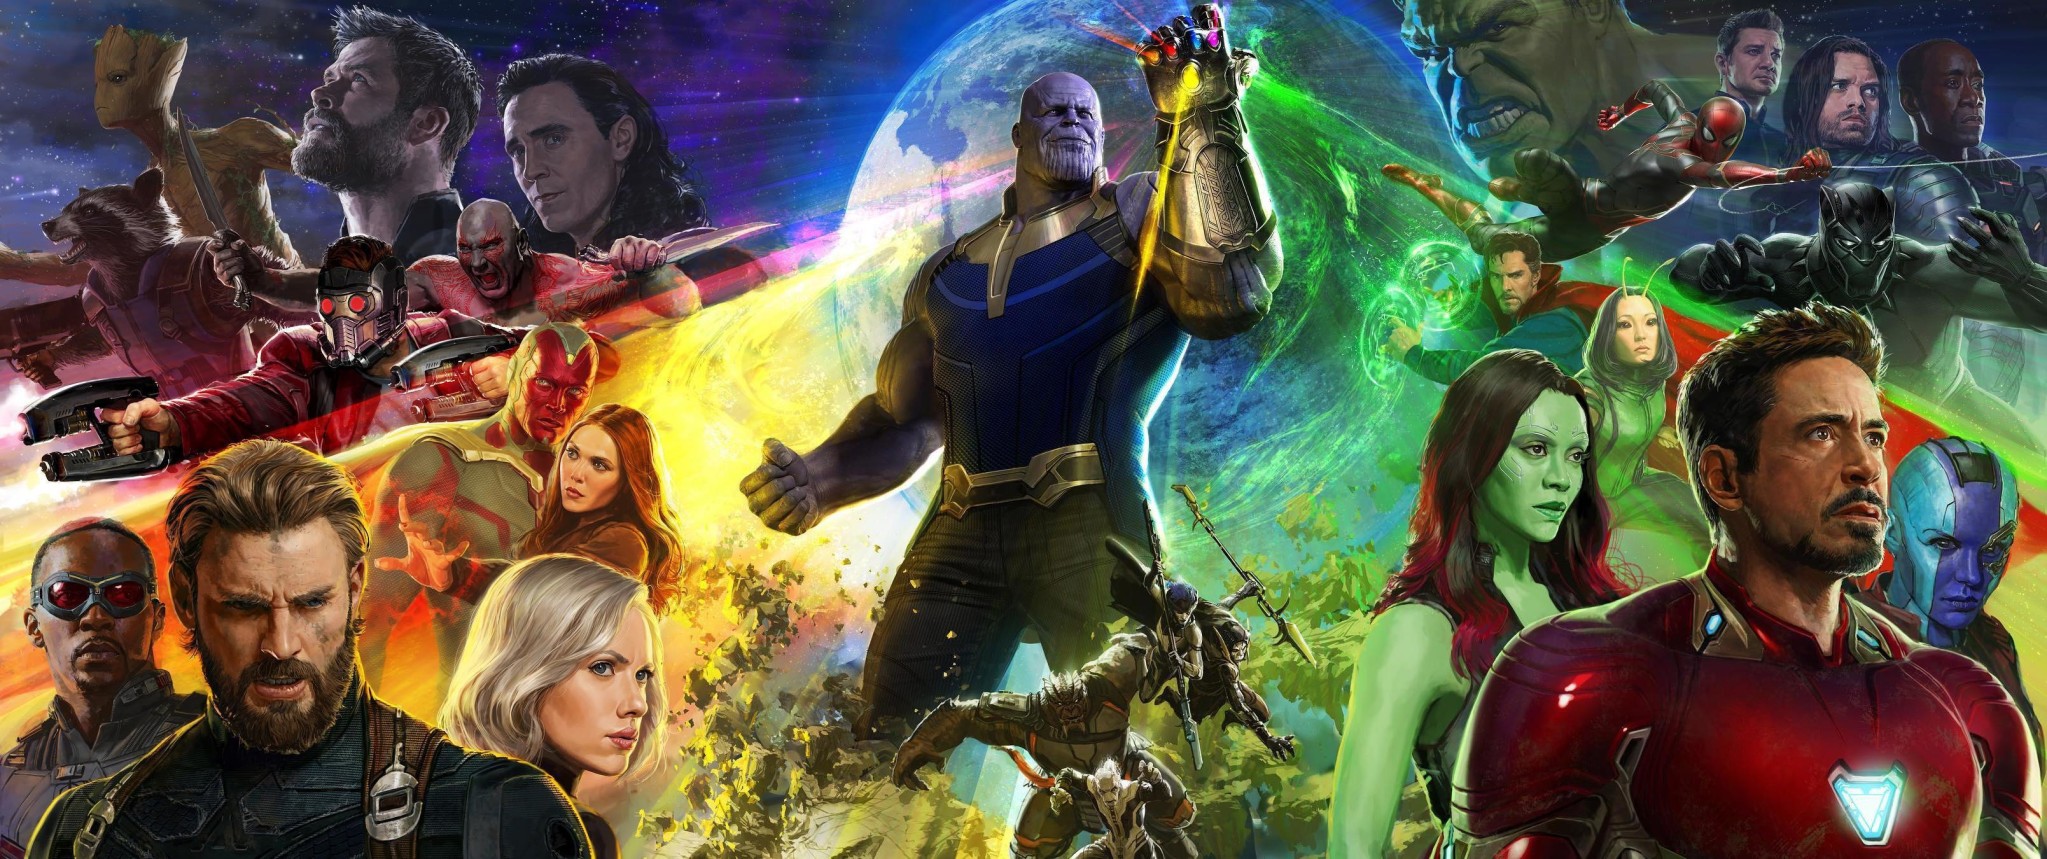 $!Revelan póster de “Avengers: Infinity War” en Comic-Con 2017